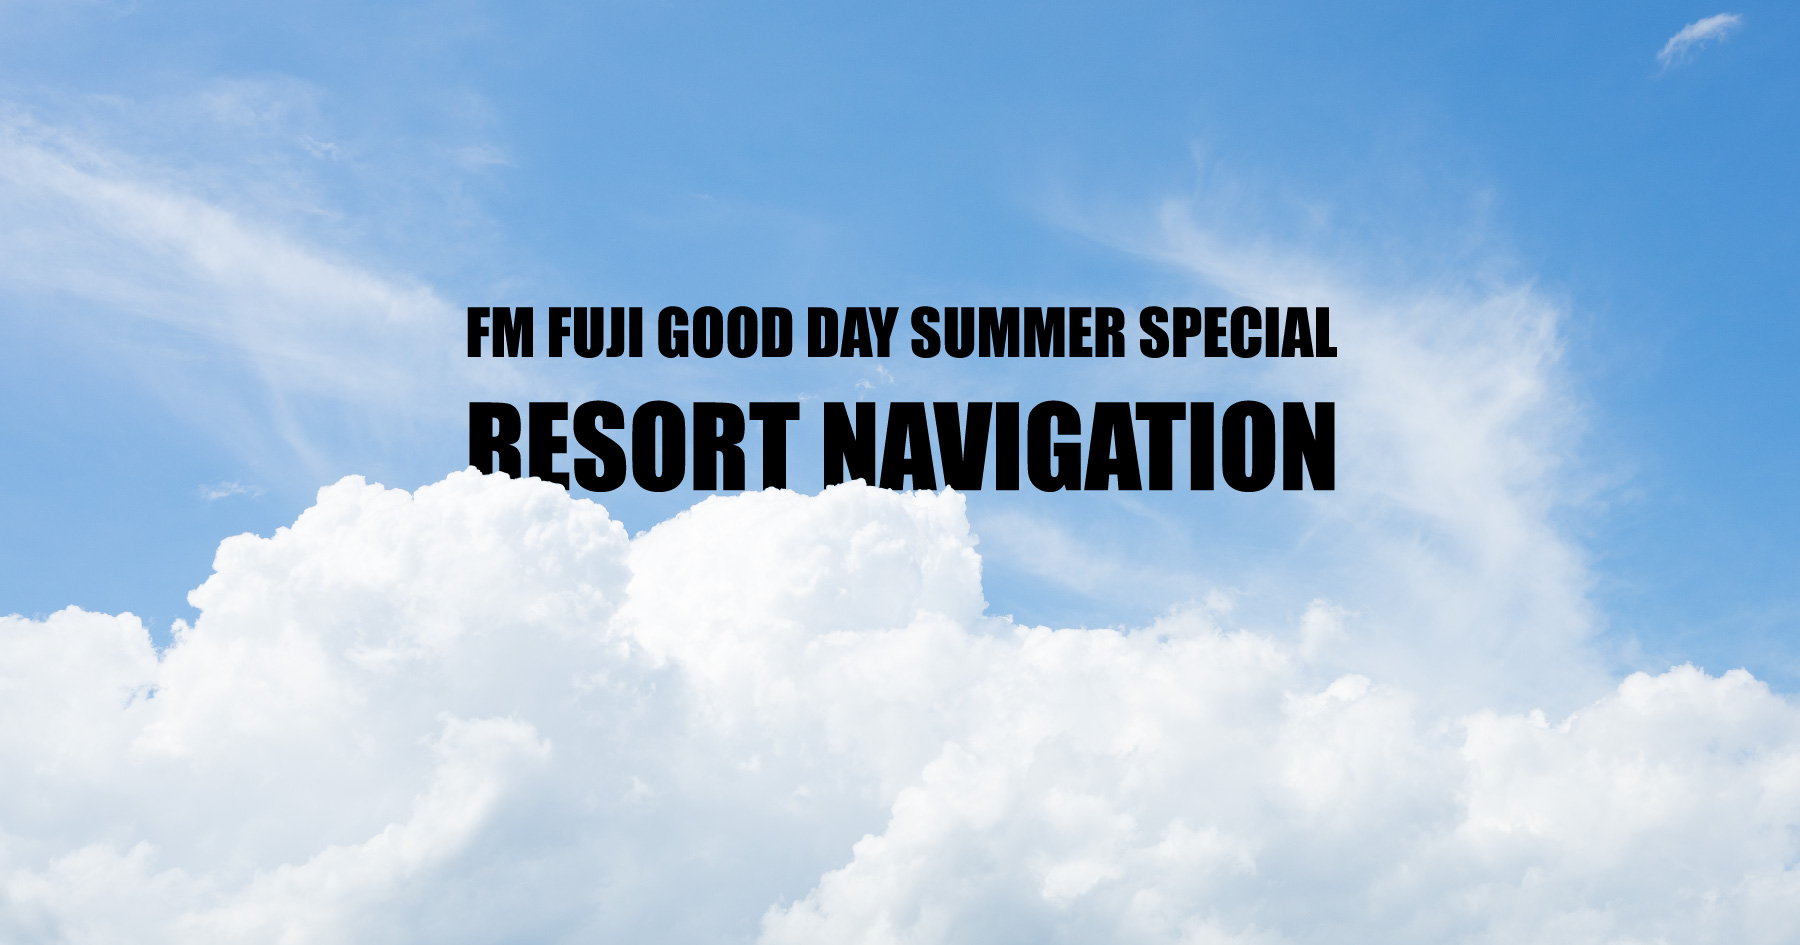 FM FUJI GOOD DAY SUMMER SPECIAL RESORT NAVIGATION